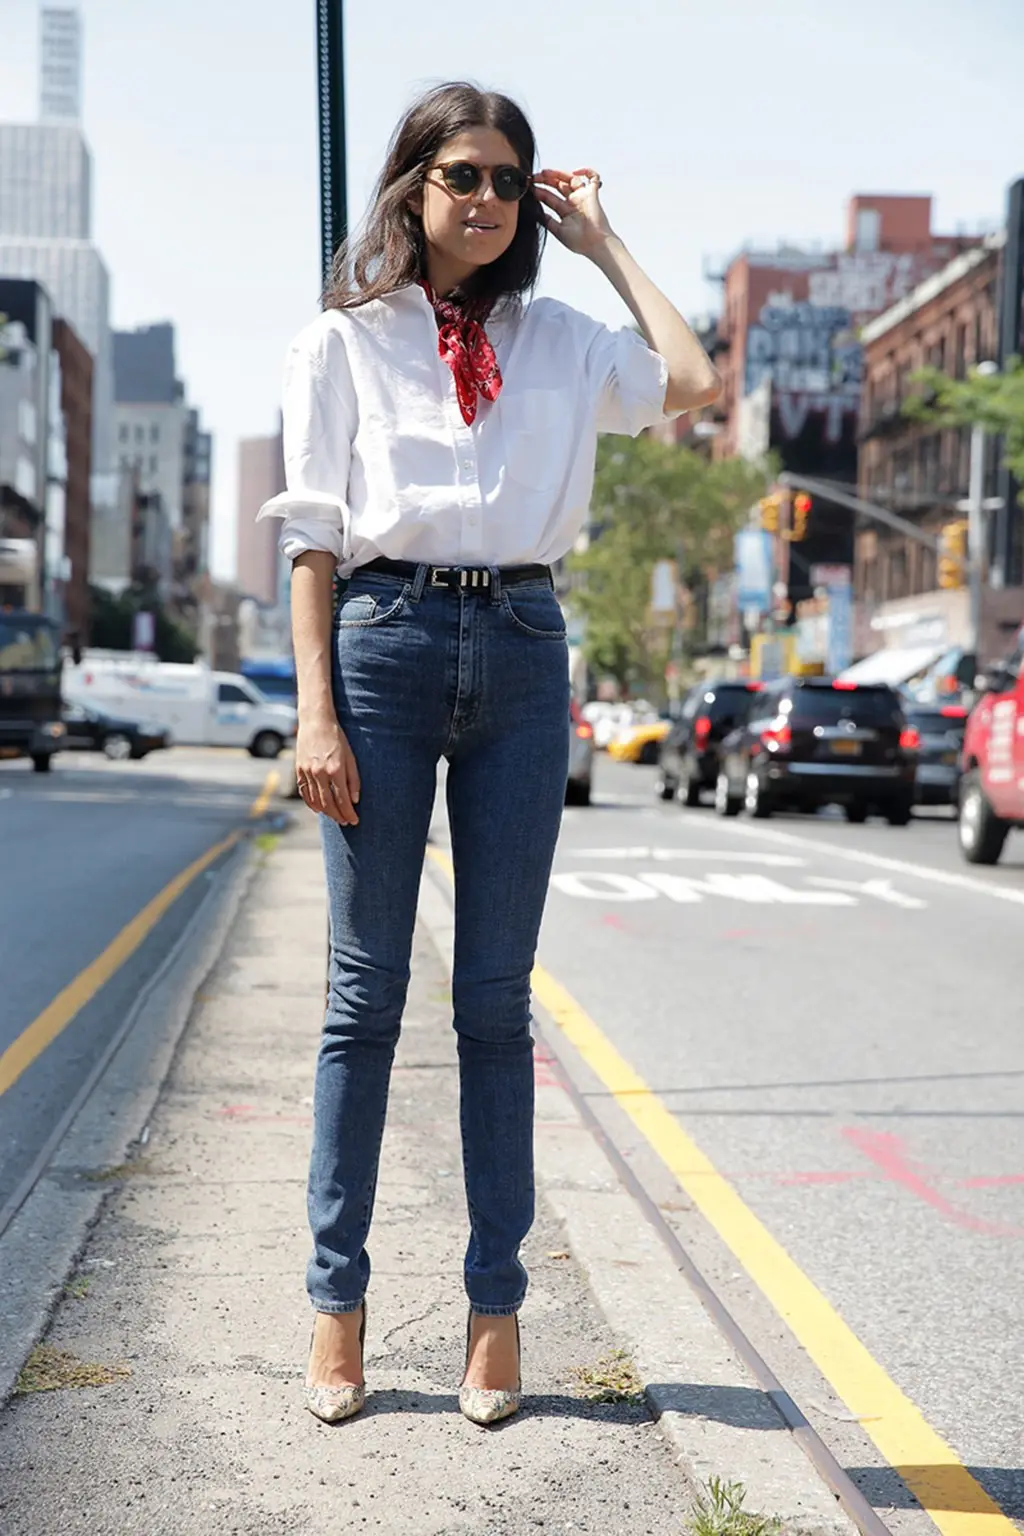 Mix and match kemeja putih dan jeans yang stylish. (Image: media.glamour.com)